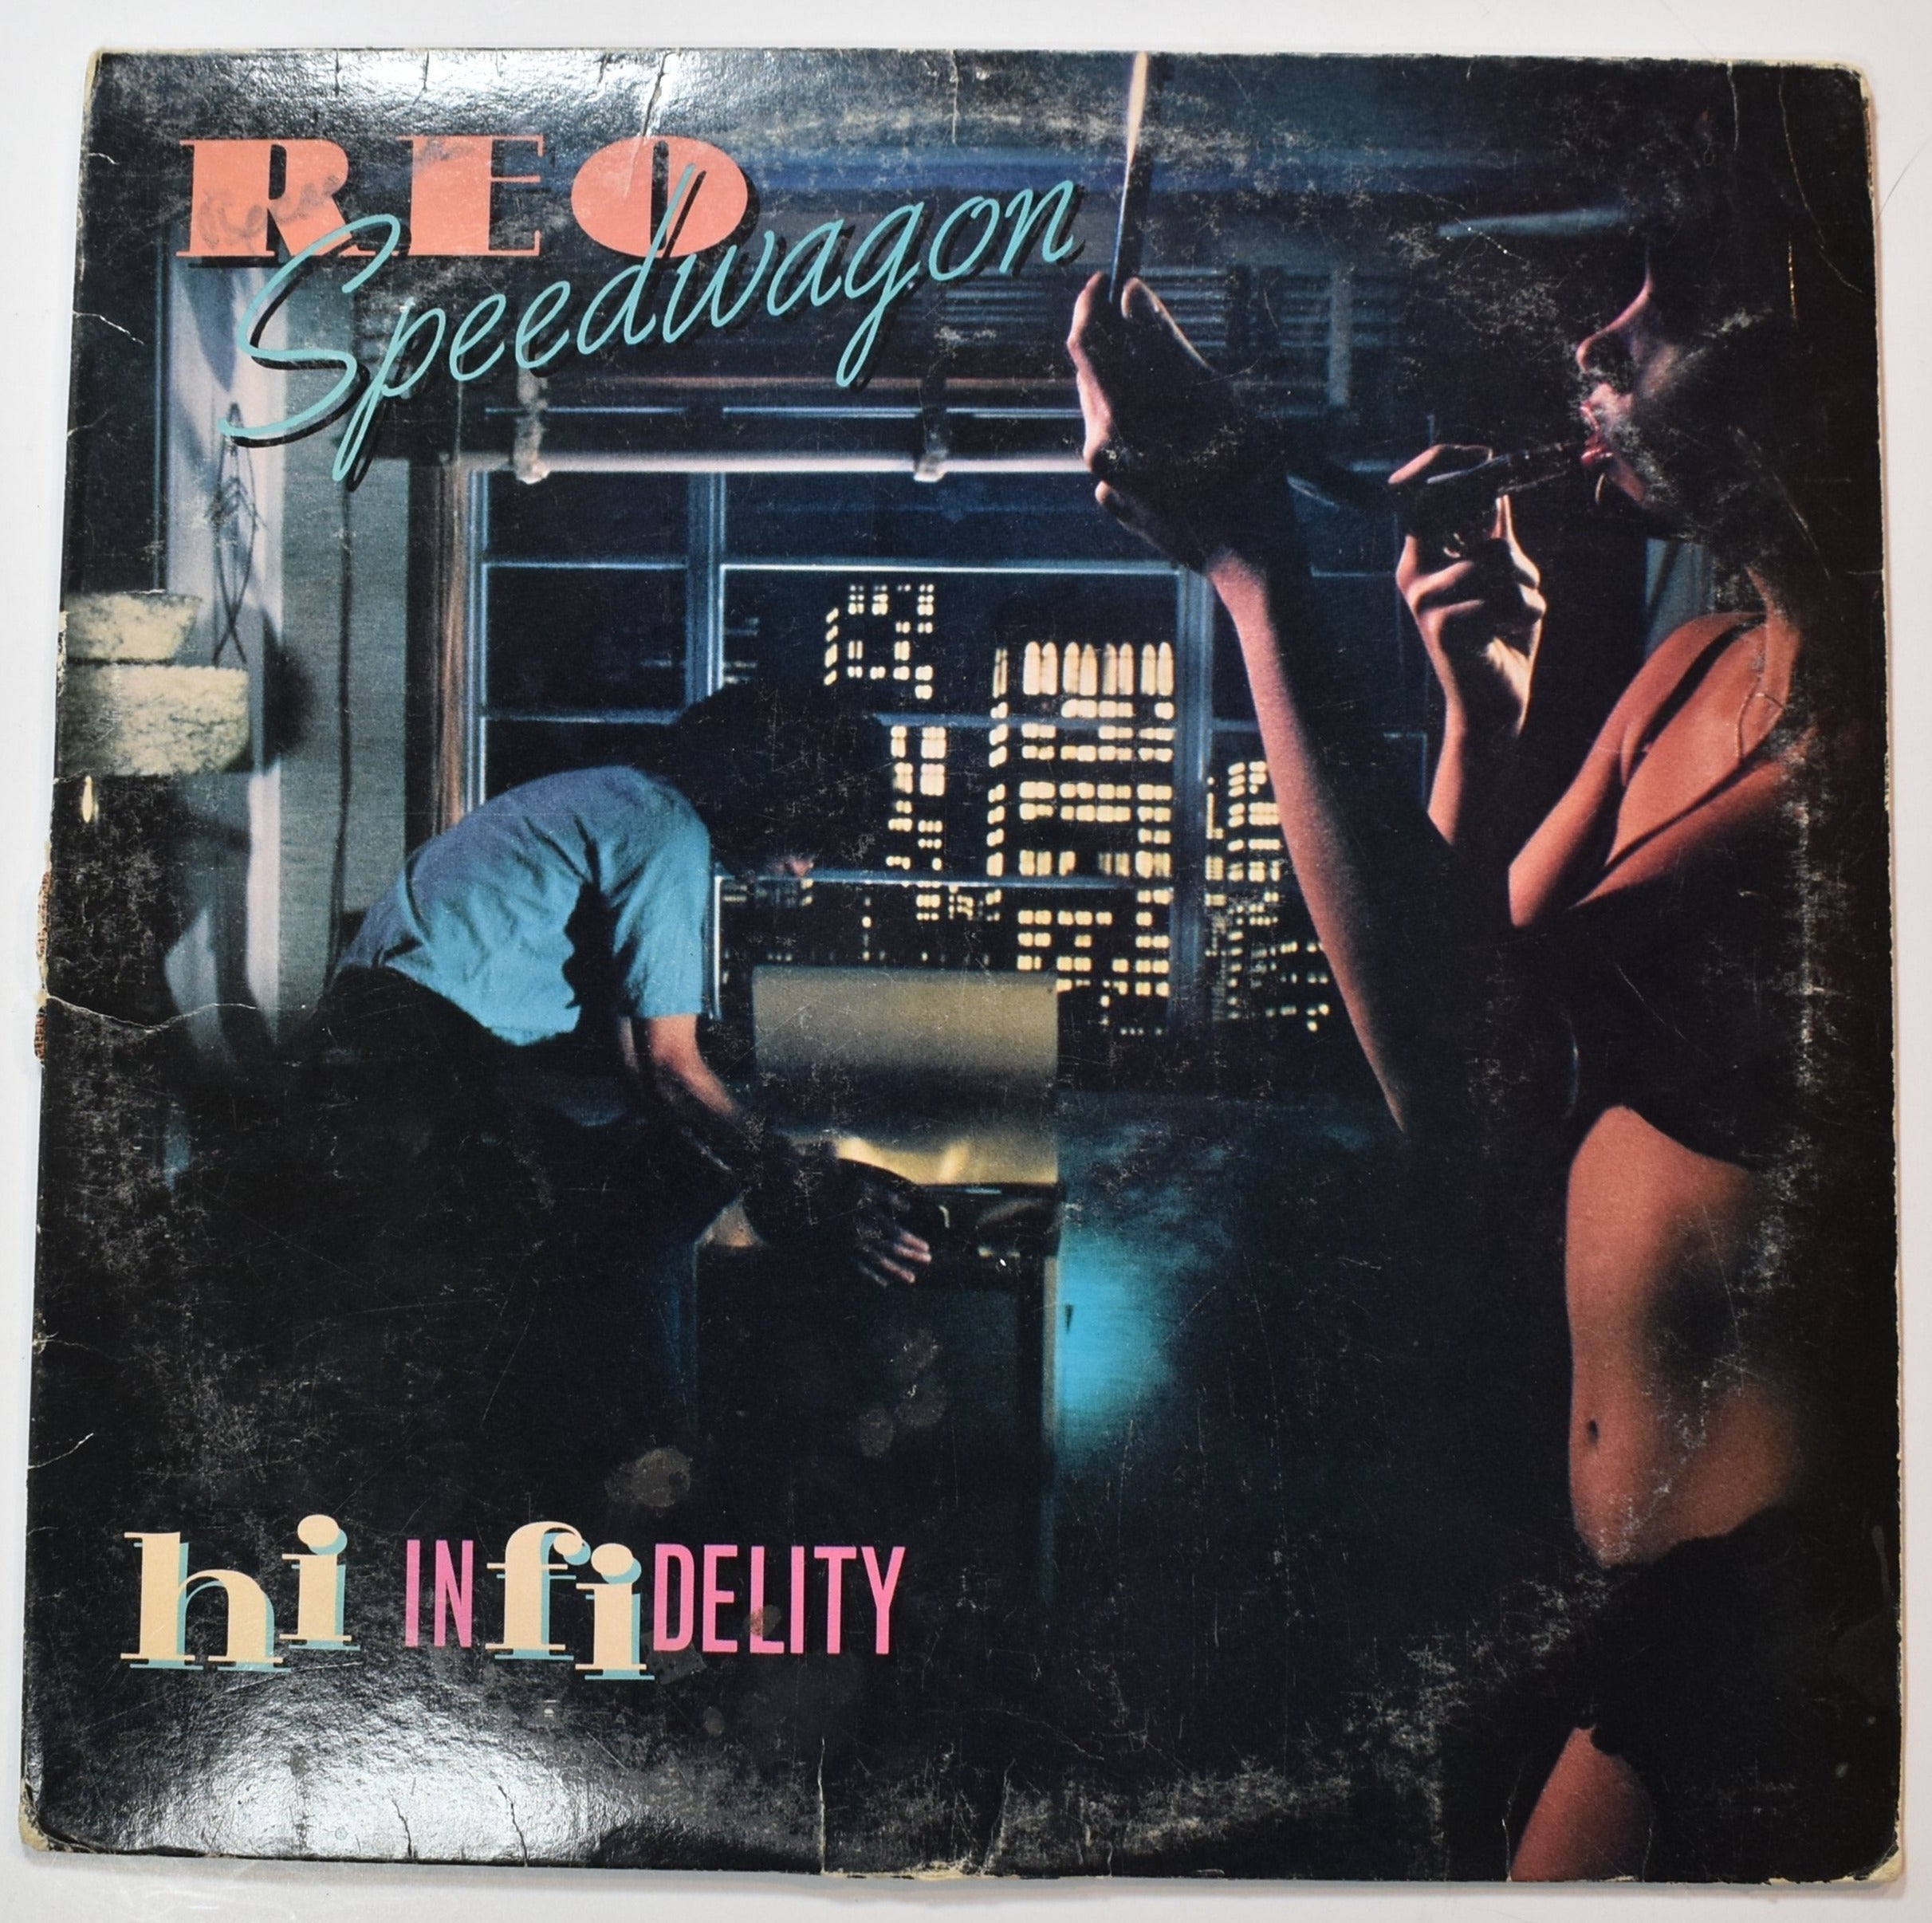 Vinyl Music Record REO Speed wagon Hi In Fidelity used